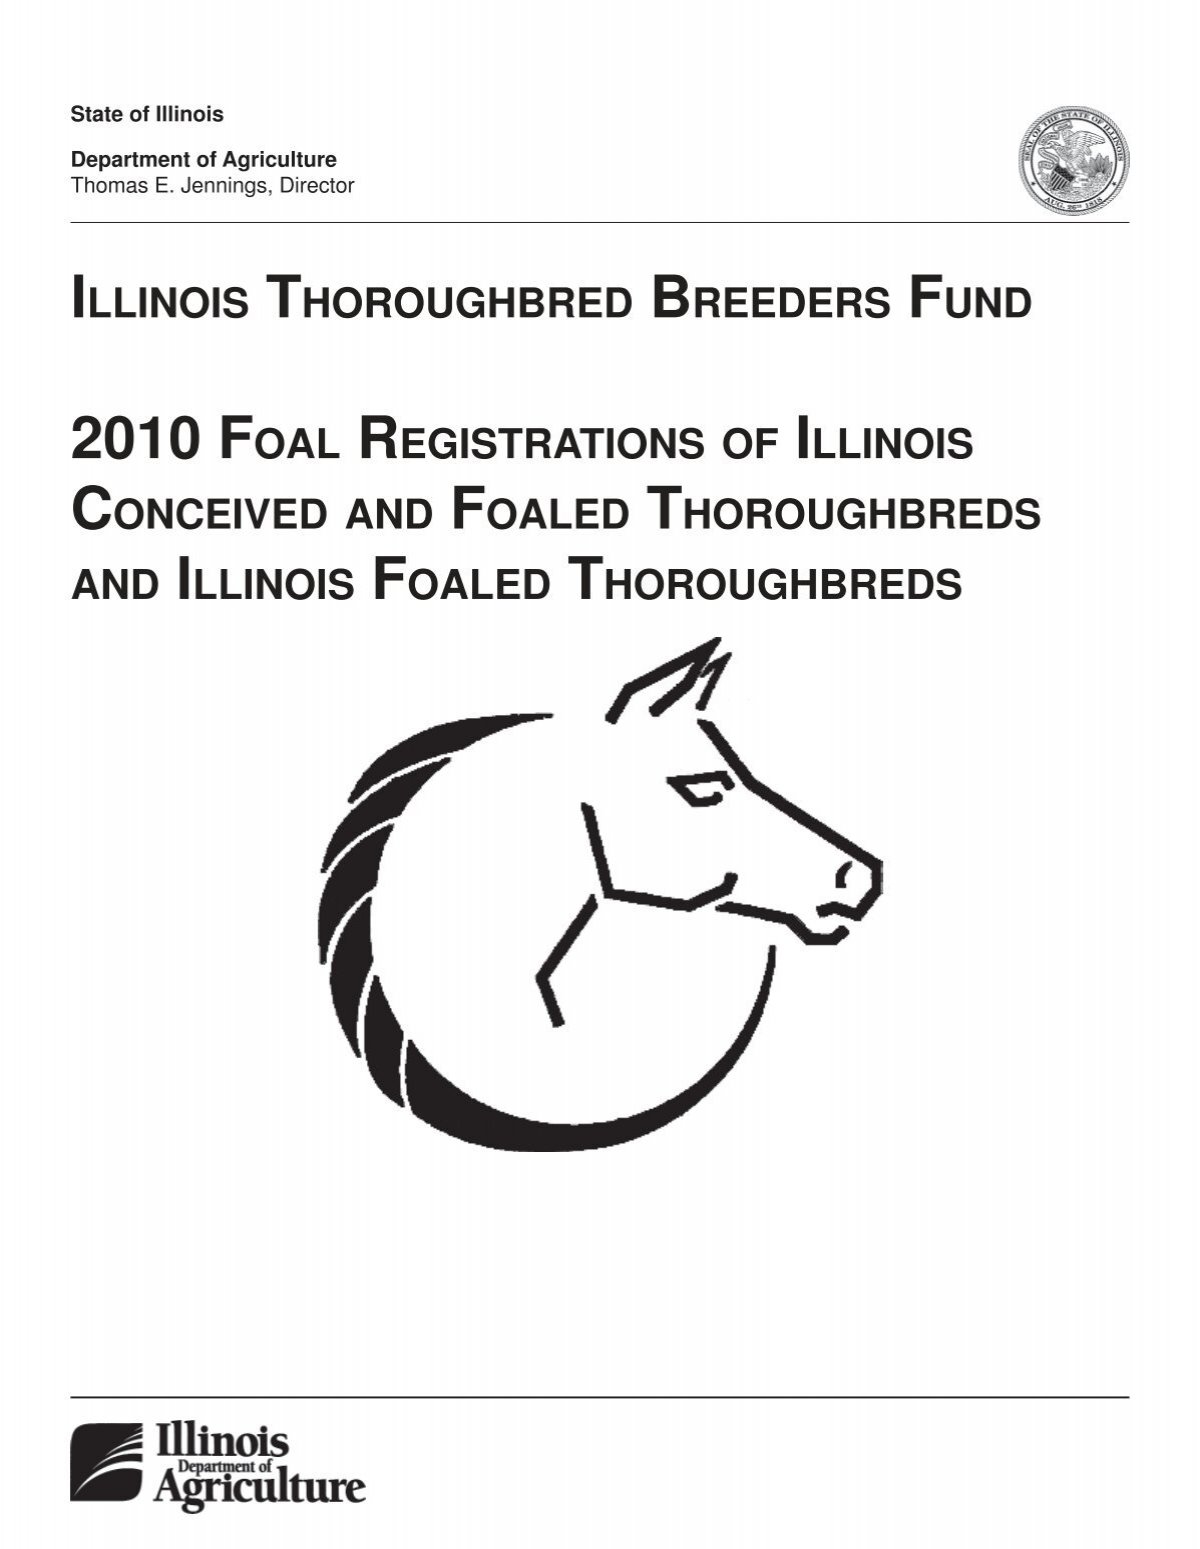 Illinois Thoroughbred Breeders Fund Program Registration Recap